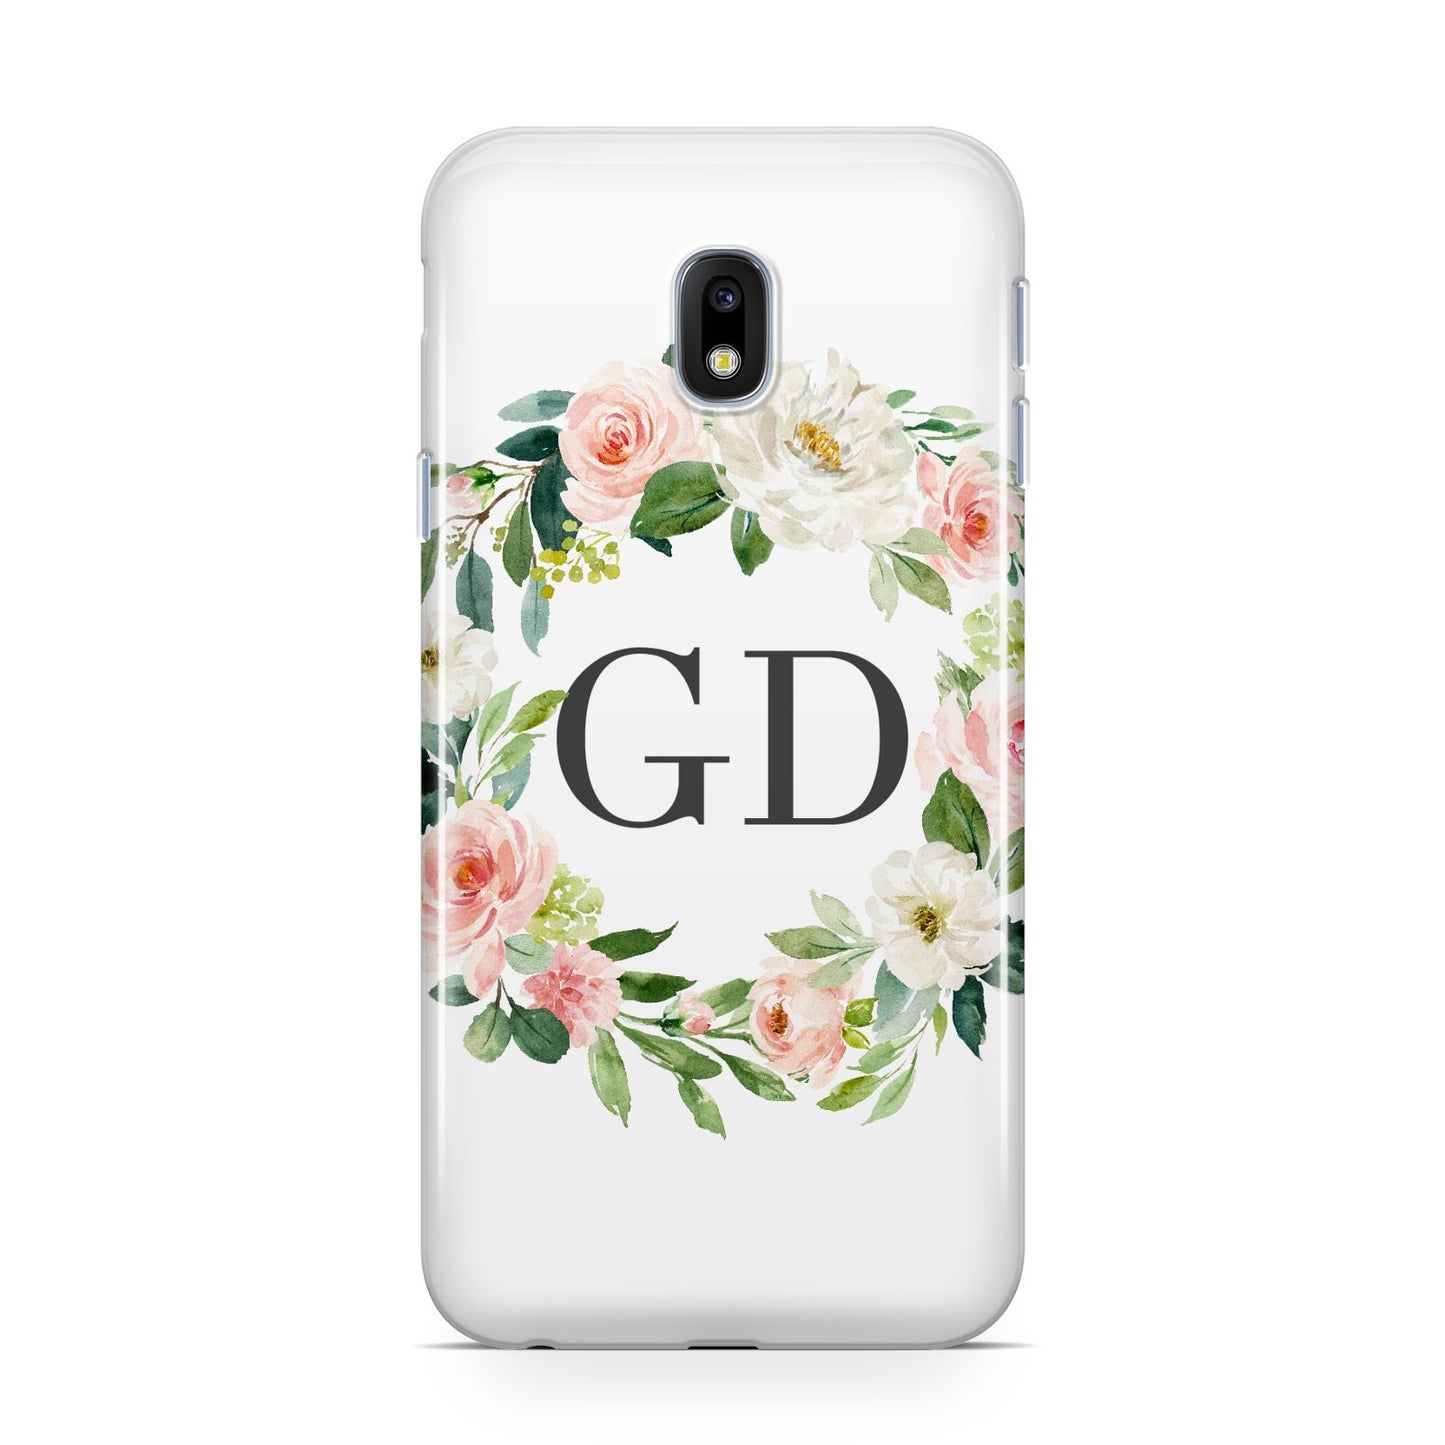 Personalised floral wreath Samsung Galaxy J3 2017 Case